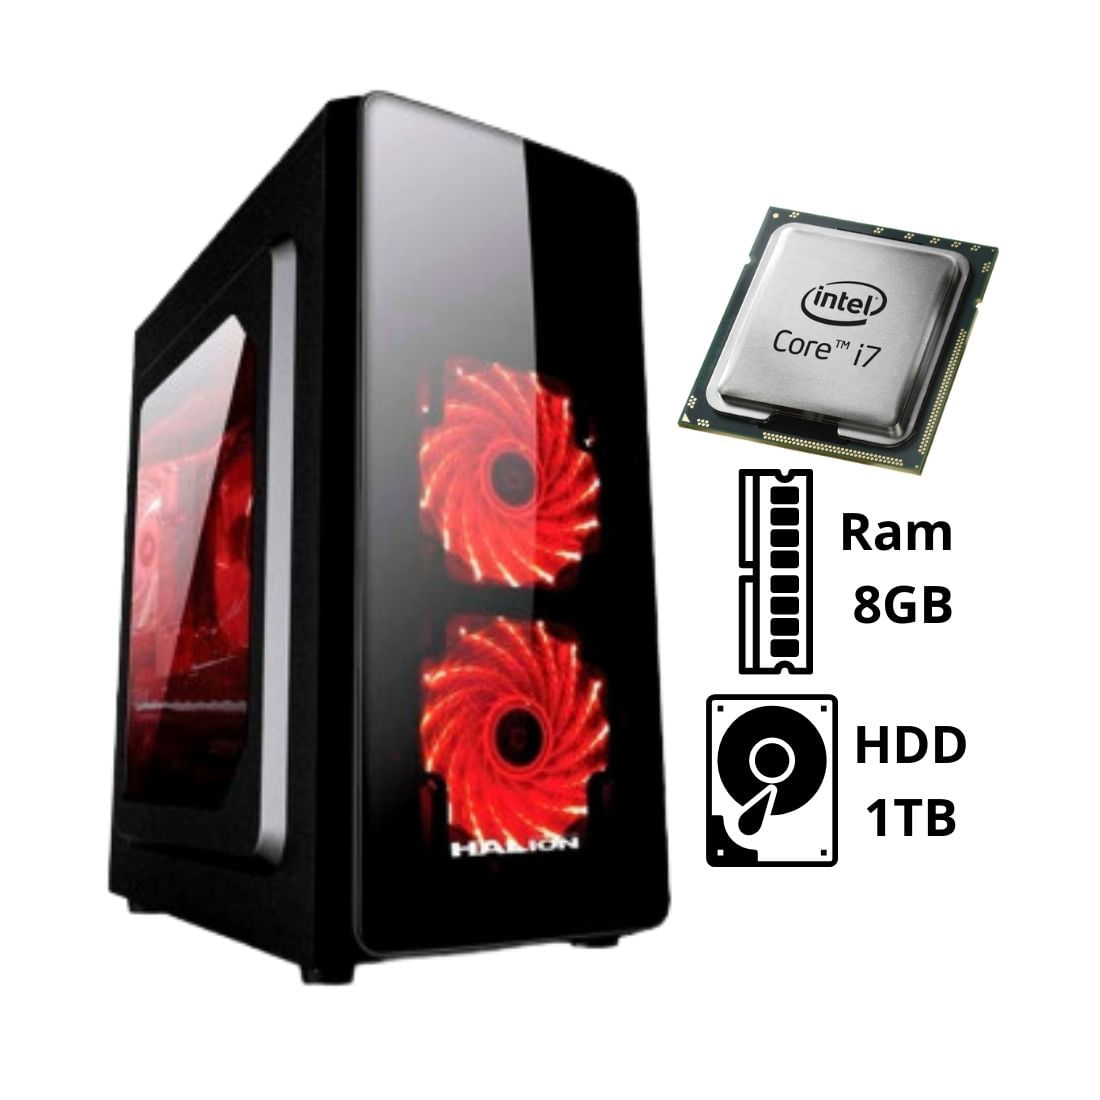 Computadora Pc Intel Core I7 3.40 GHZ RAM 8GB HDD 1TB